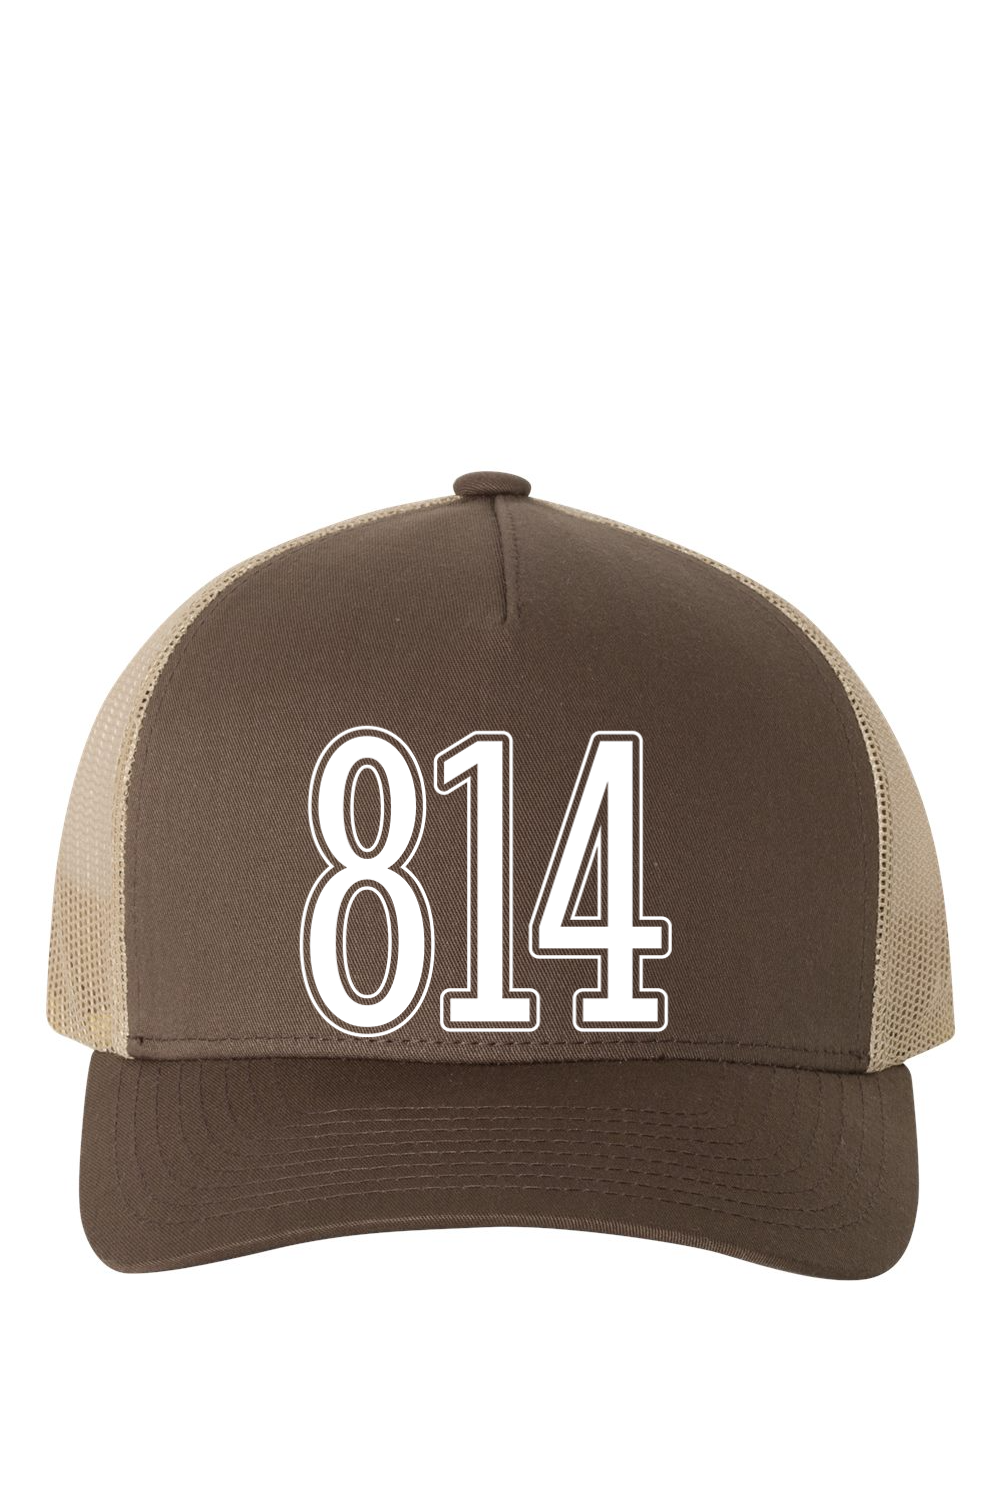 814 - Classic Snapback Hat - Yinzylvania